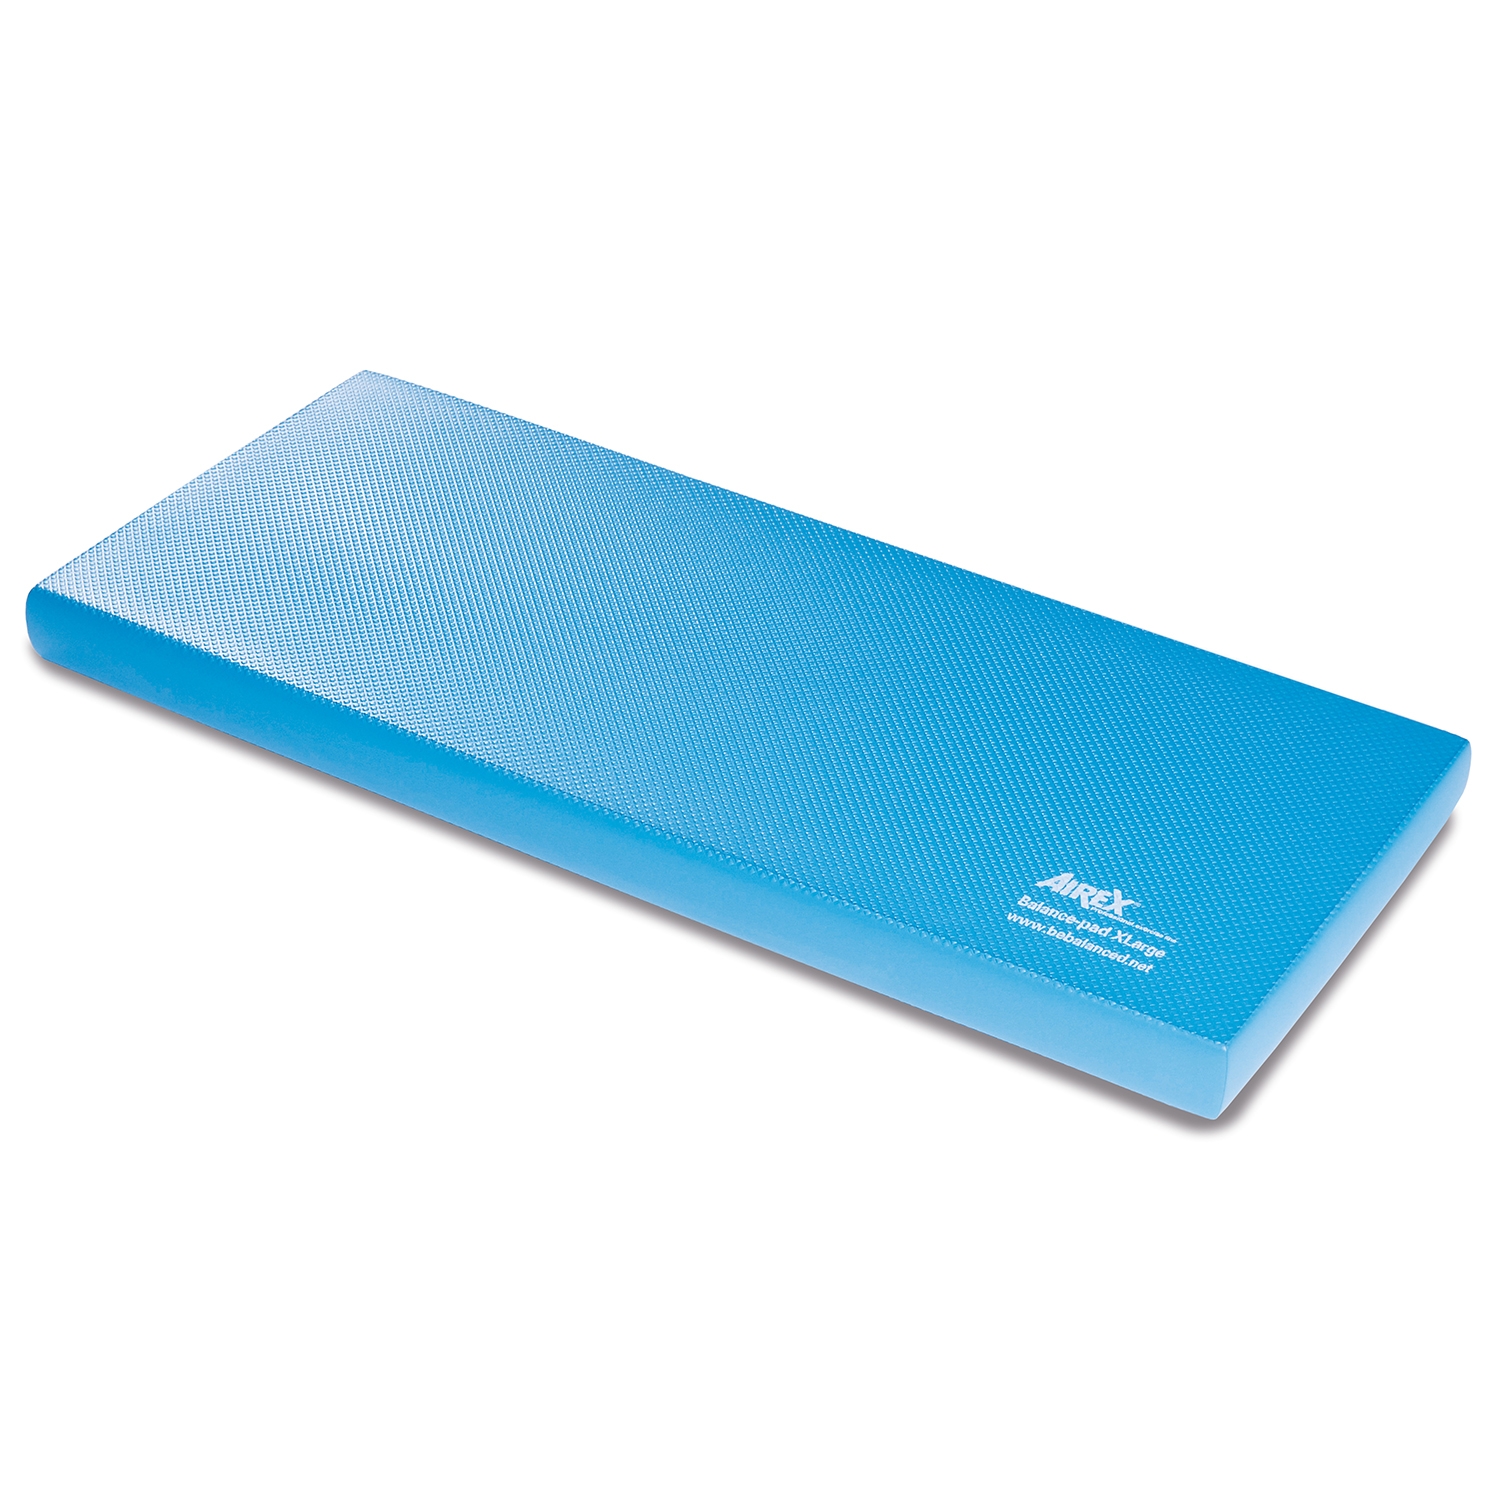 Airex Balance Pad XLarge - 98 x 41 x 6 cm - bleu